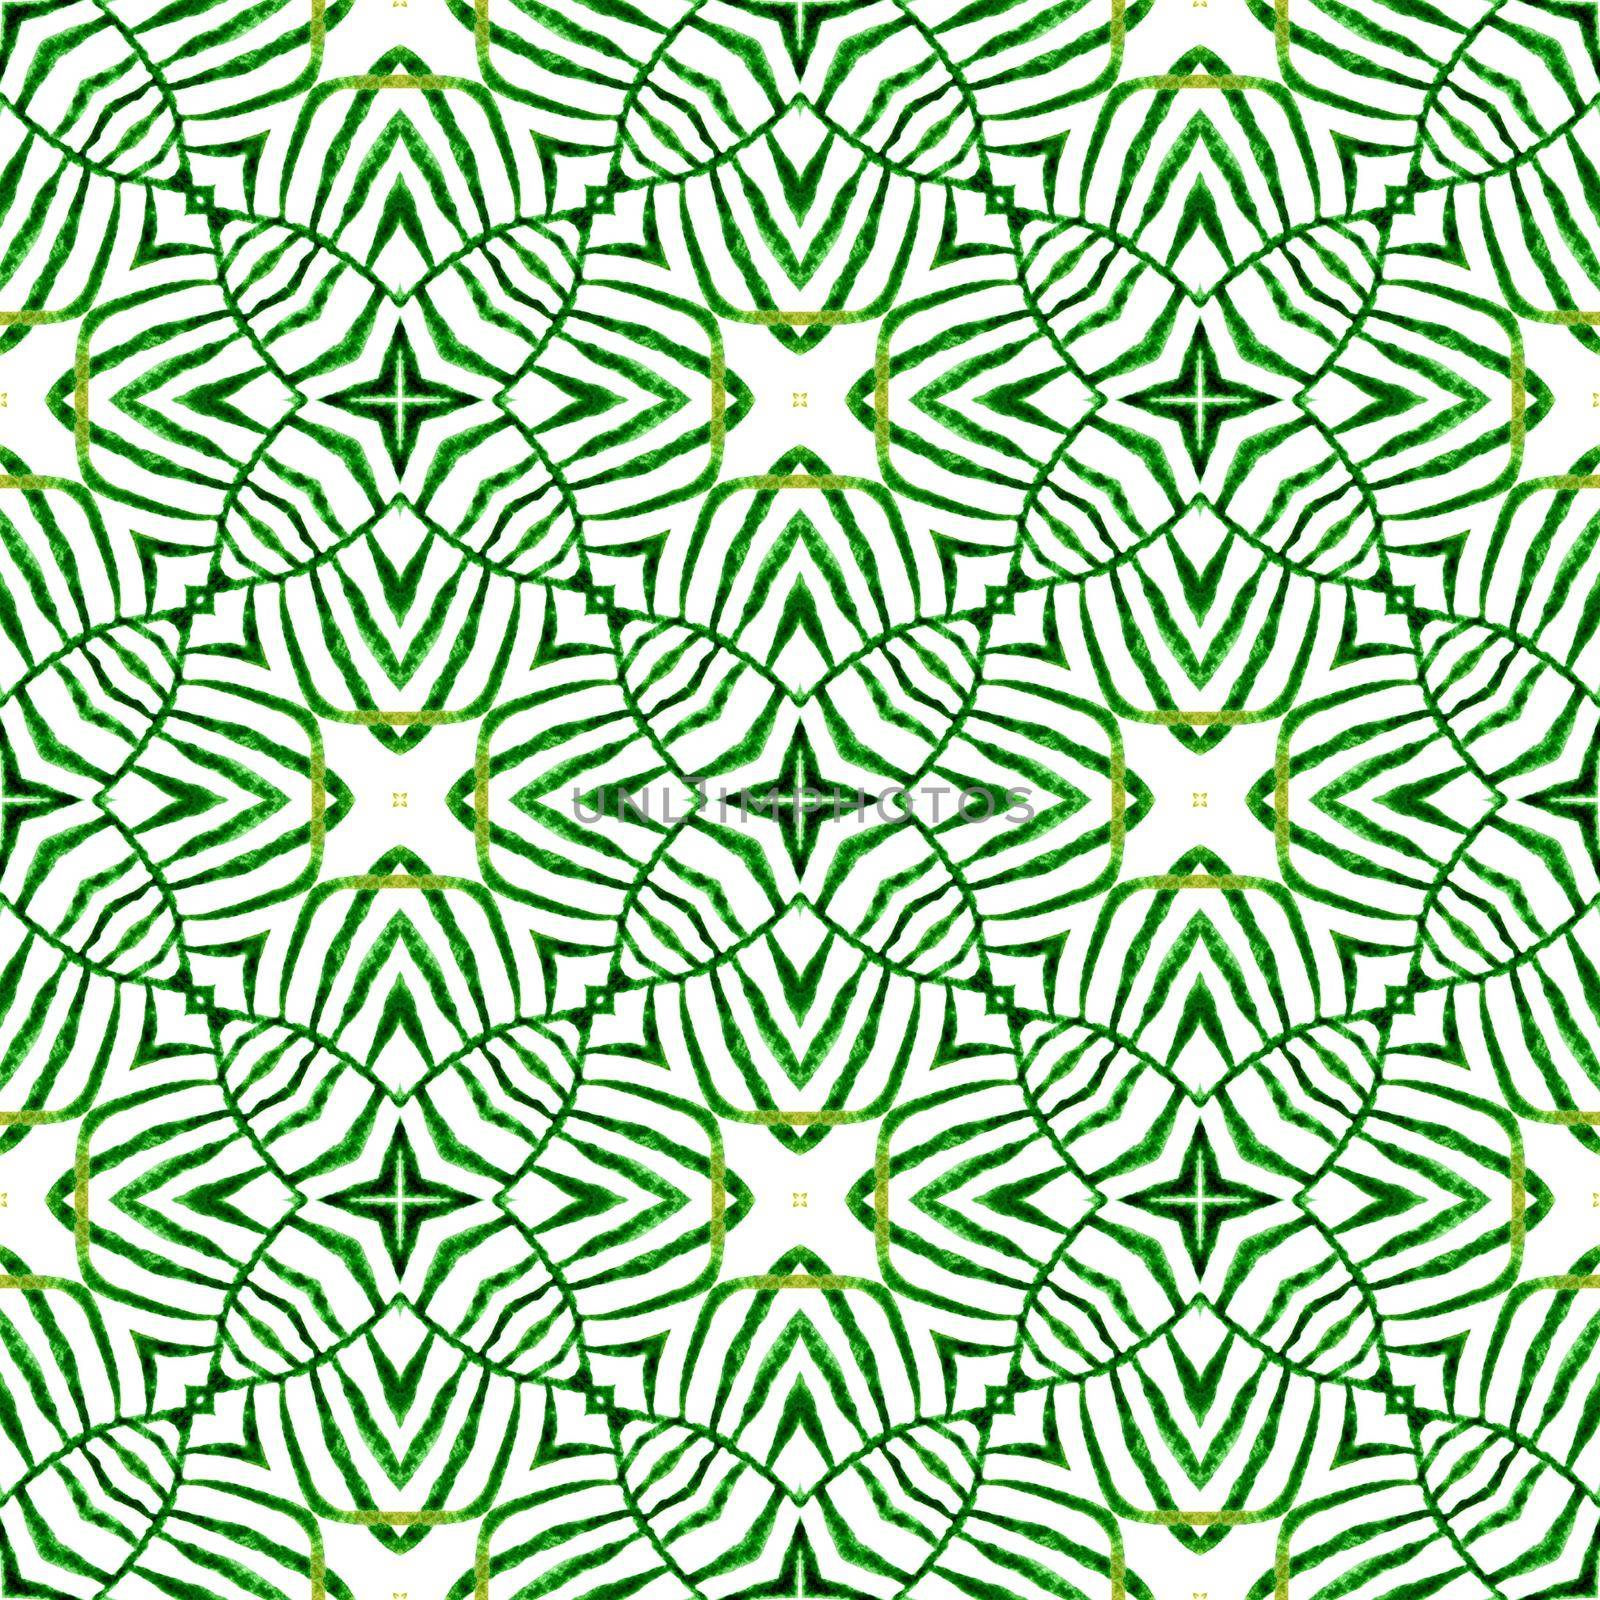 Textile ready neat print, swimwear fabric, wallpaper, wrapping. Green curious boho chic summer design. Trendy organic green border. Organic tile.